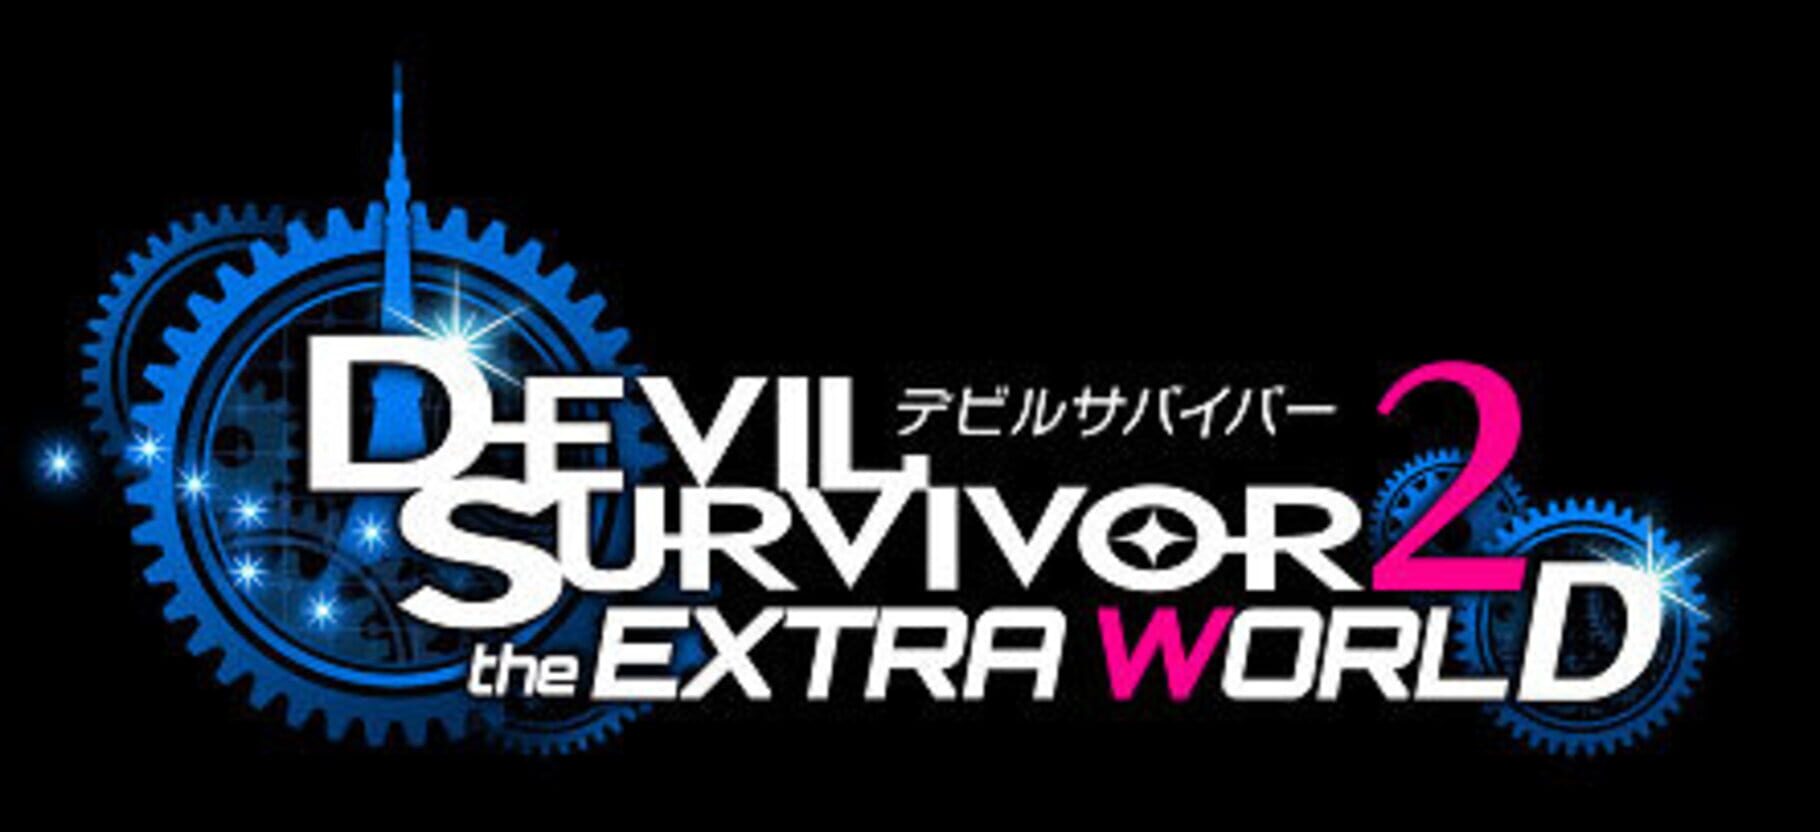 devil-survivor-2-the-extra-world-server-status-is-devil-survivor-2